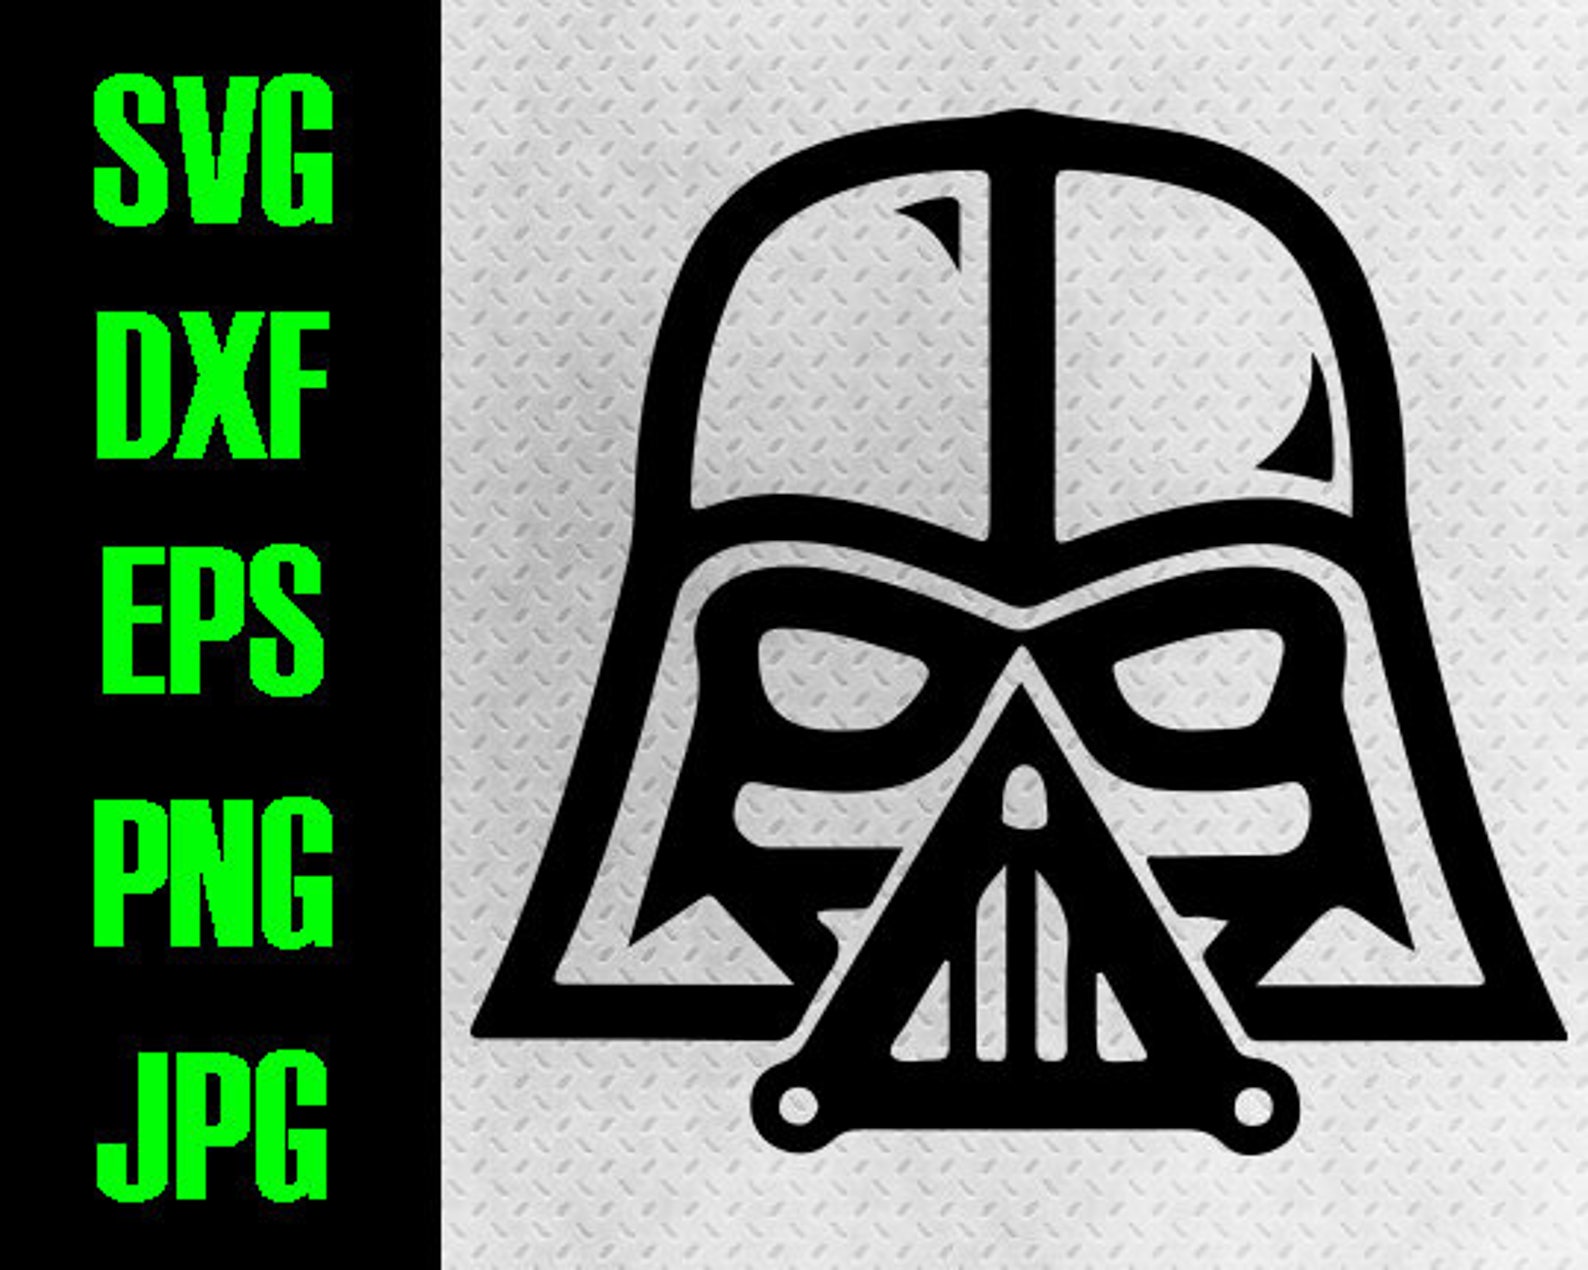 Star Wars Darth svg dxf eps png jpg cutting files | Etsy